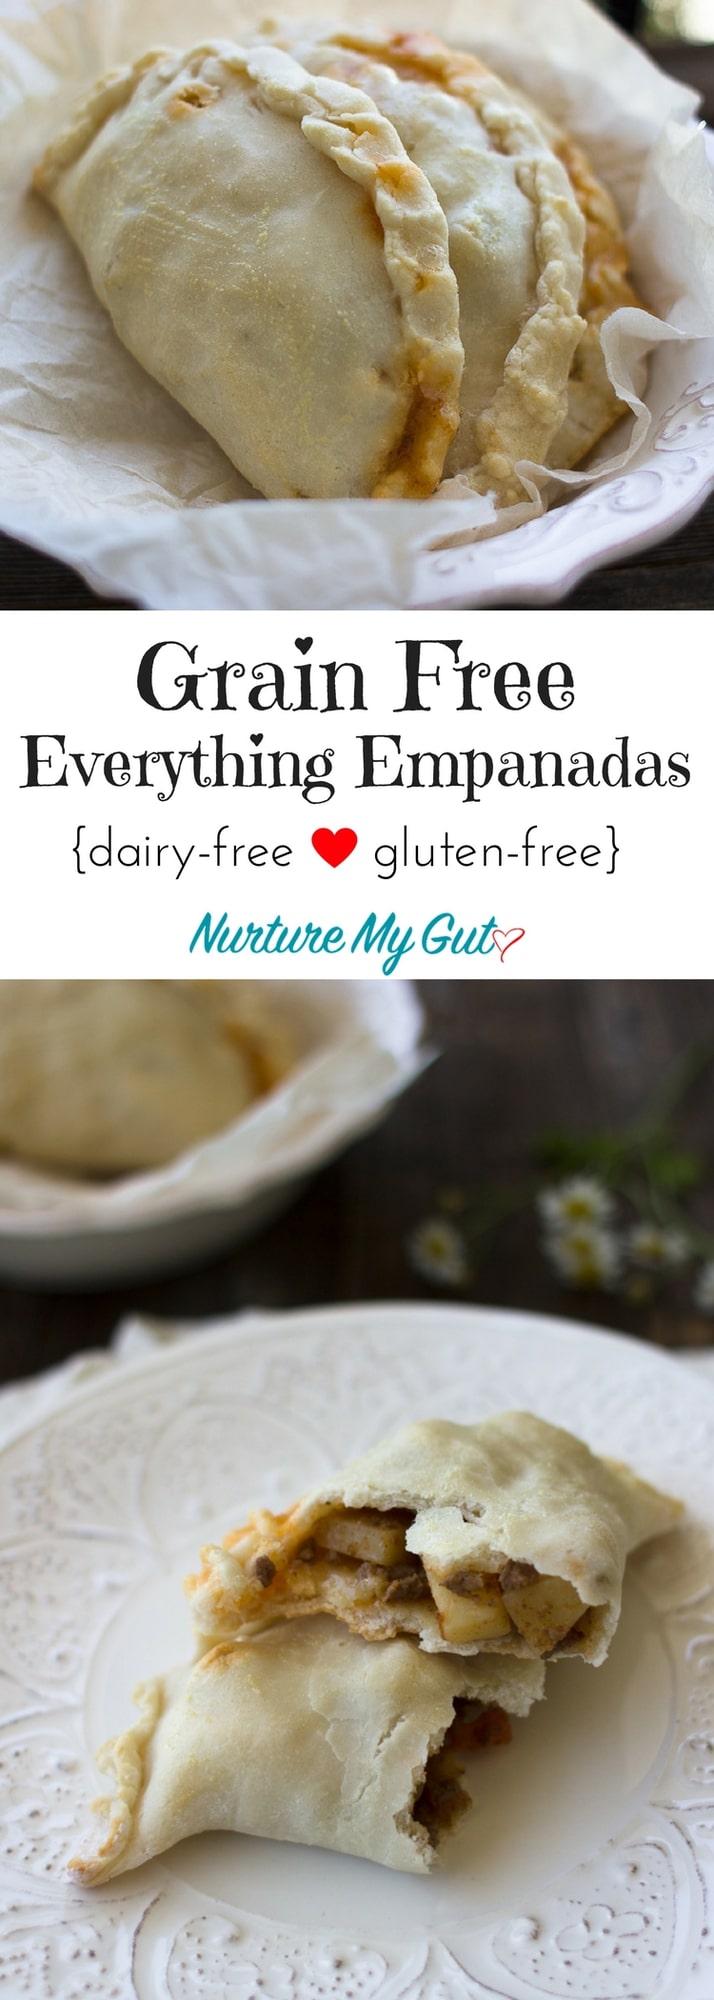 grain free everything empanadas